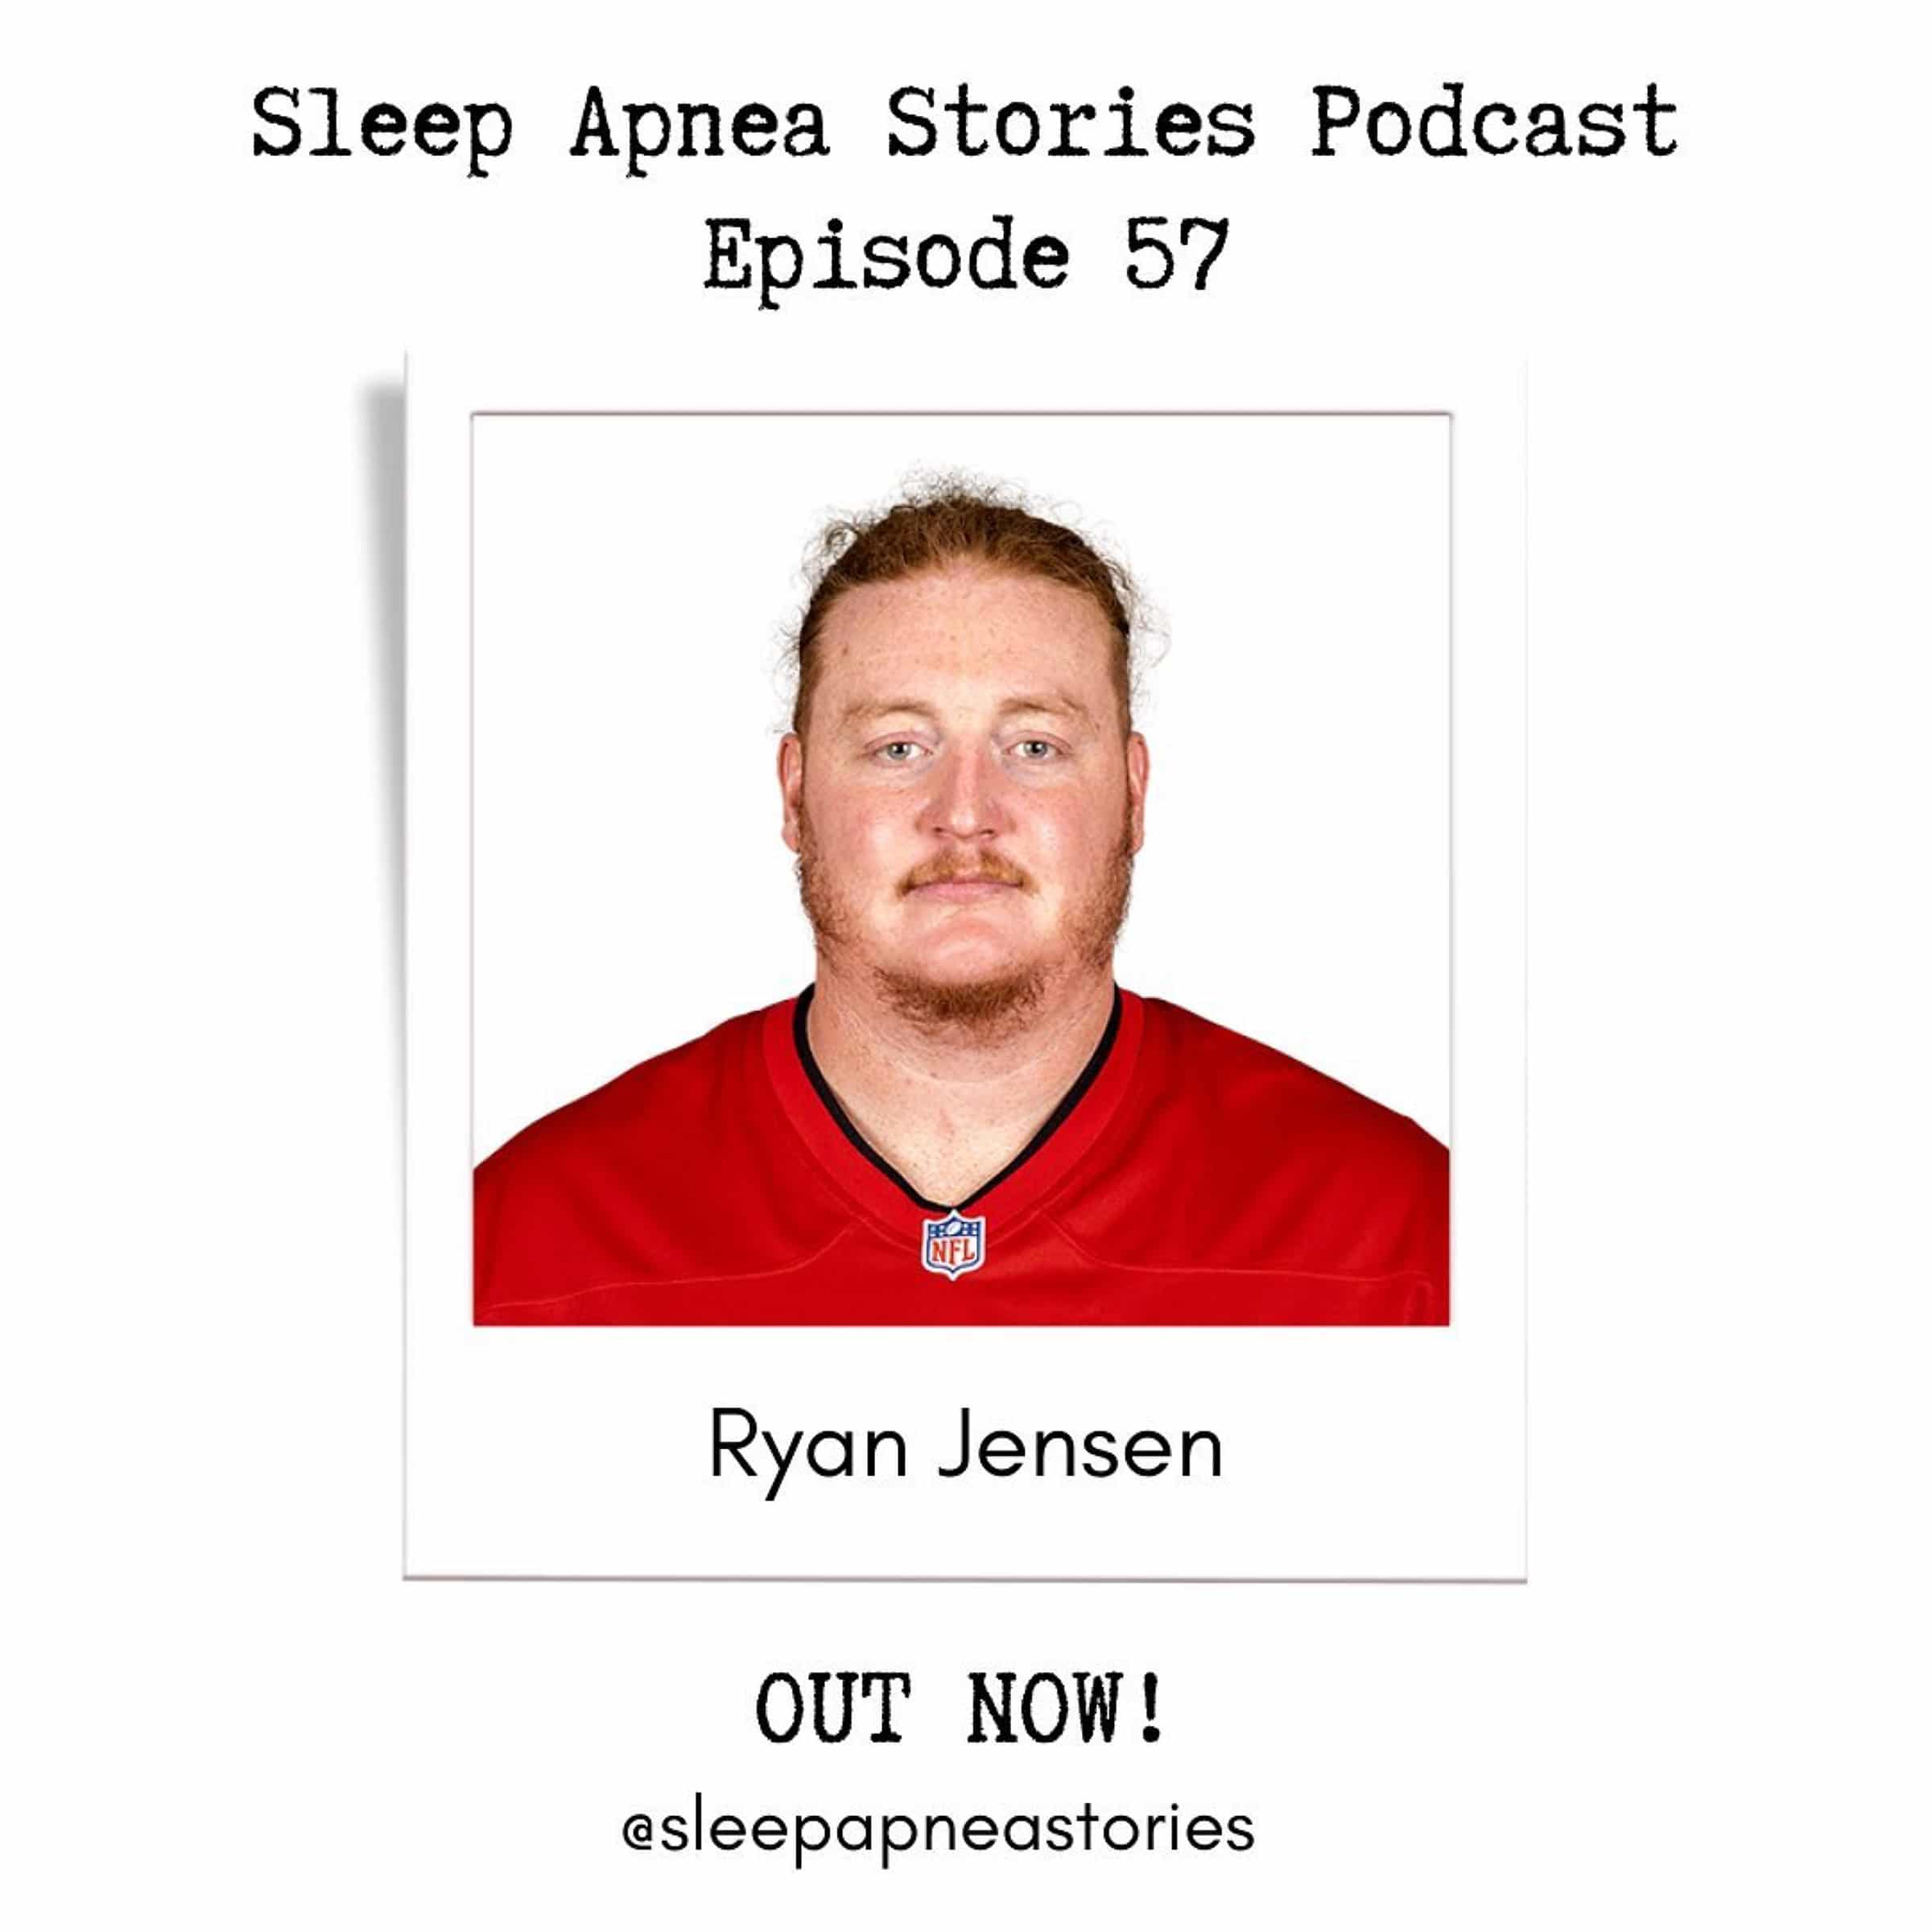 Ryan Jensen – Professional Football and Sleep Apnea